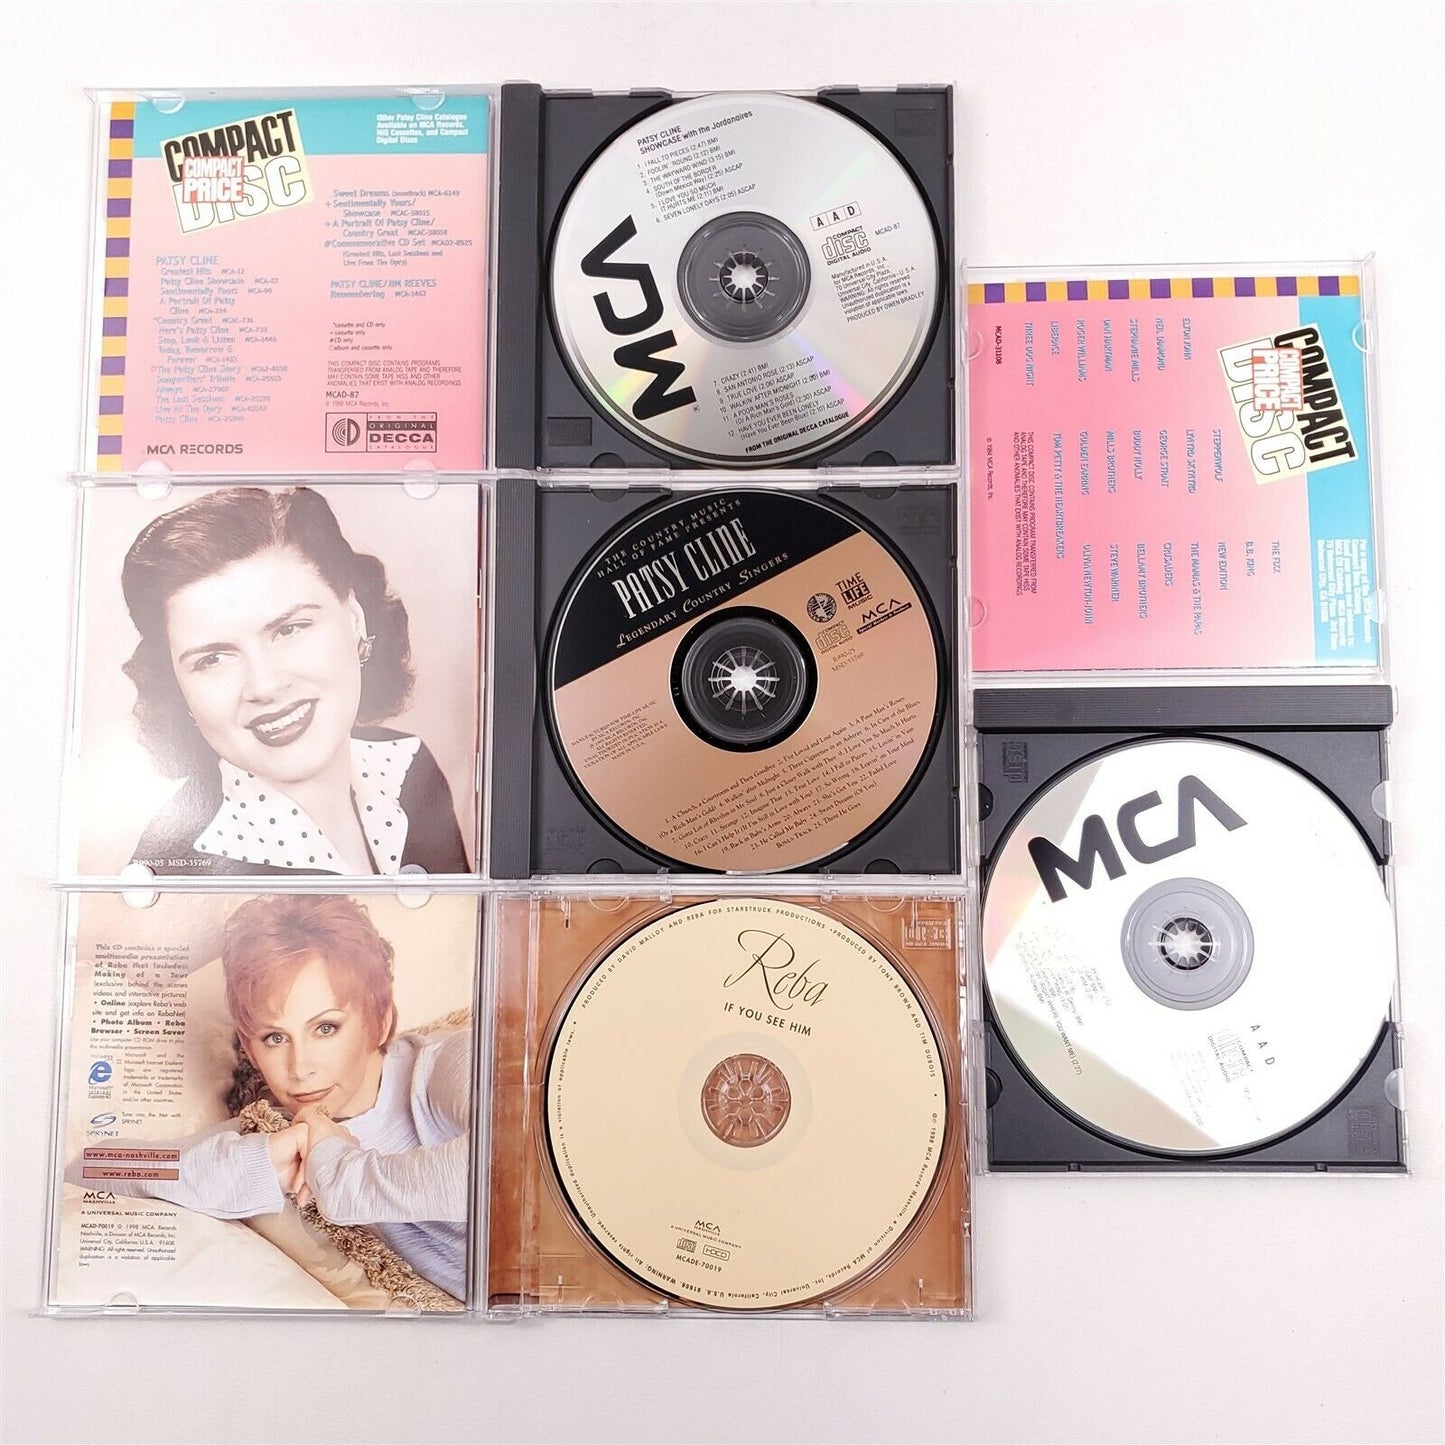 7 Female Country Artist CD's - Reba McEntire, Patsy Cline, Trisha Yearwood